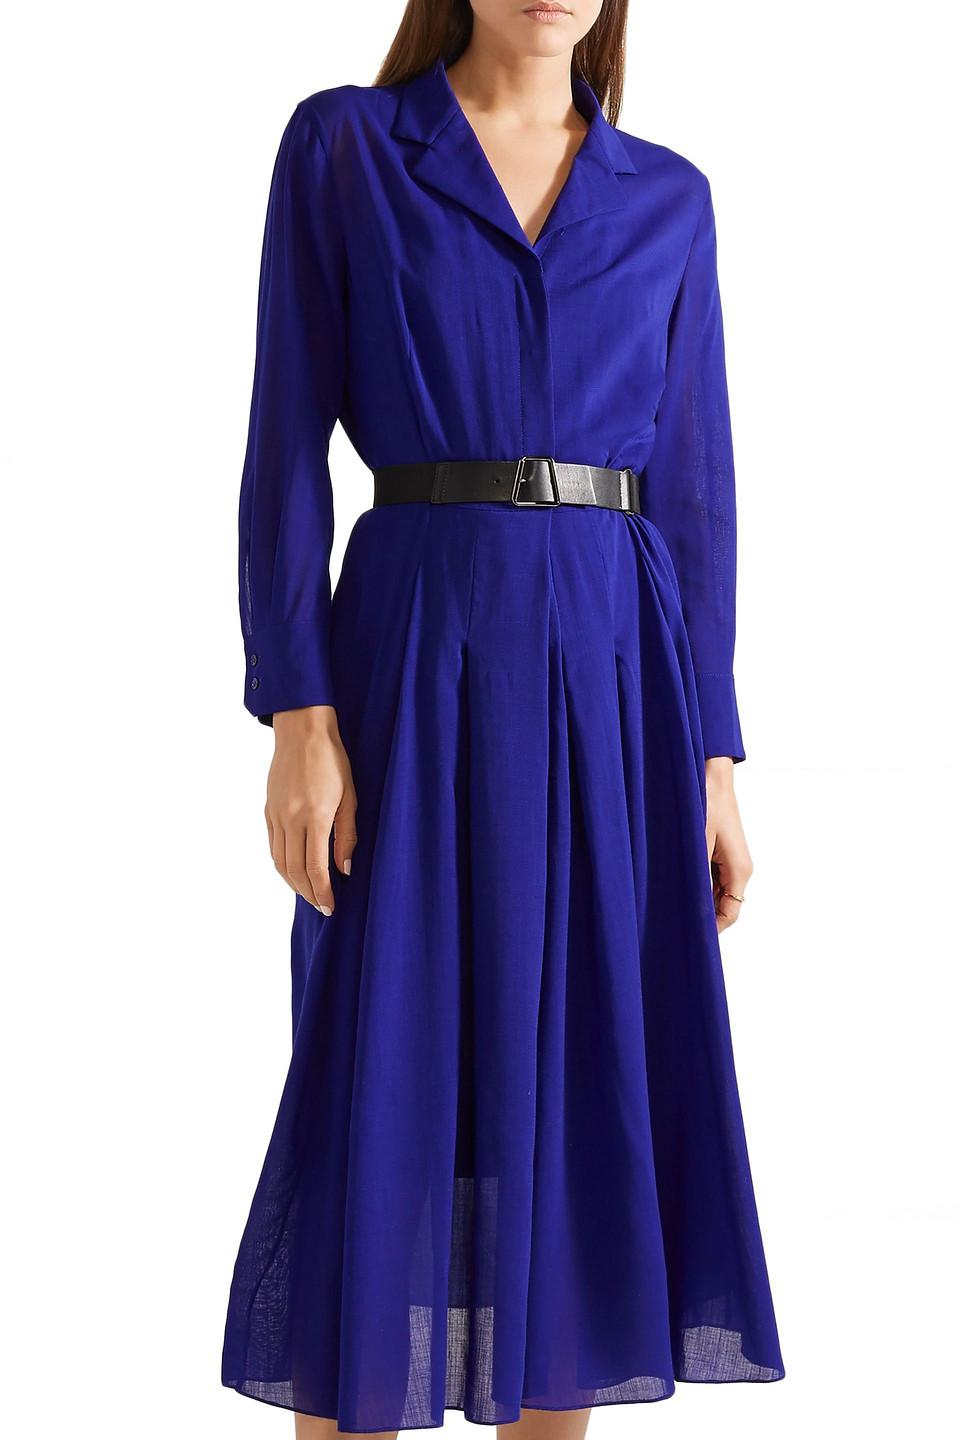 Akris Belted Wool-voile Midi Dress in Blue - Lyst